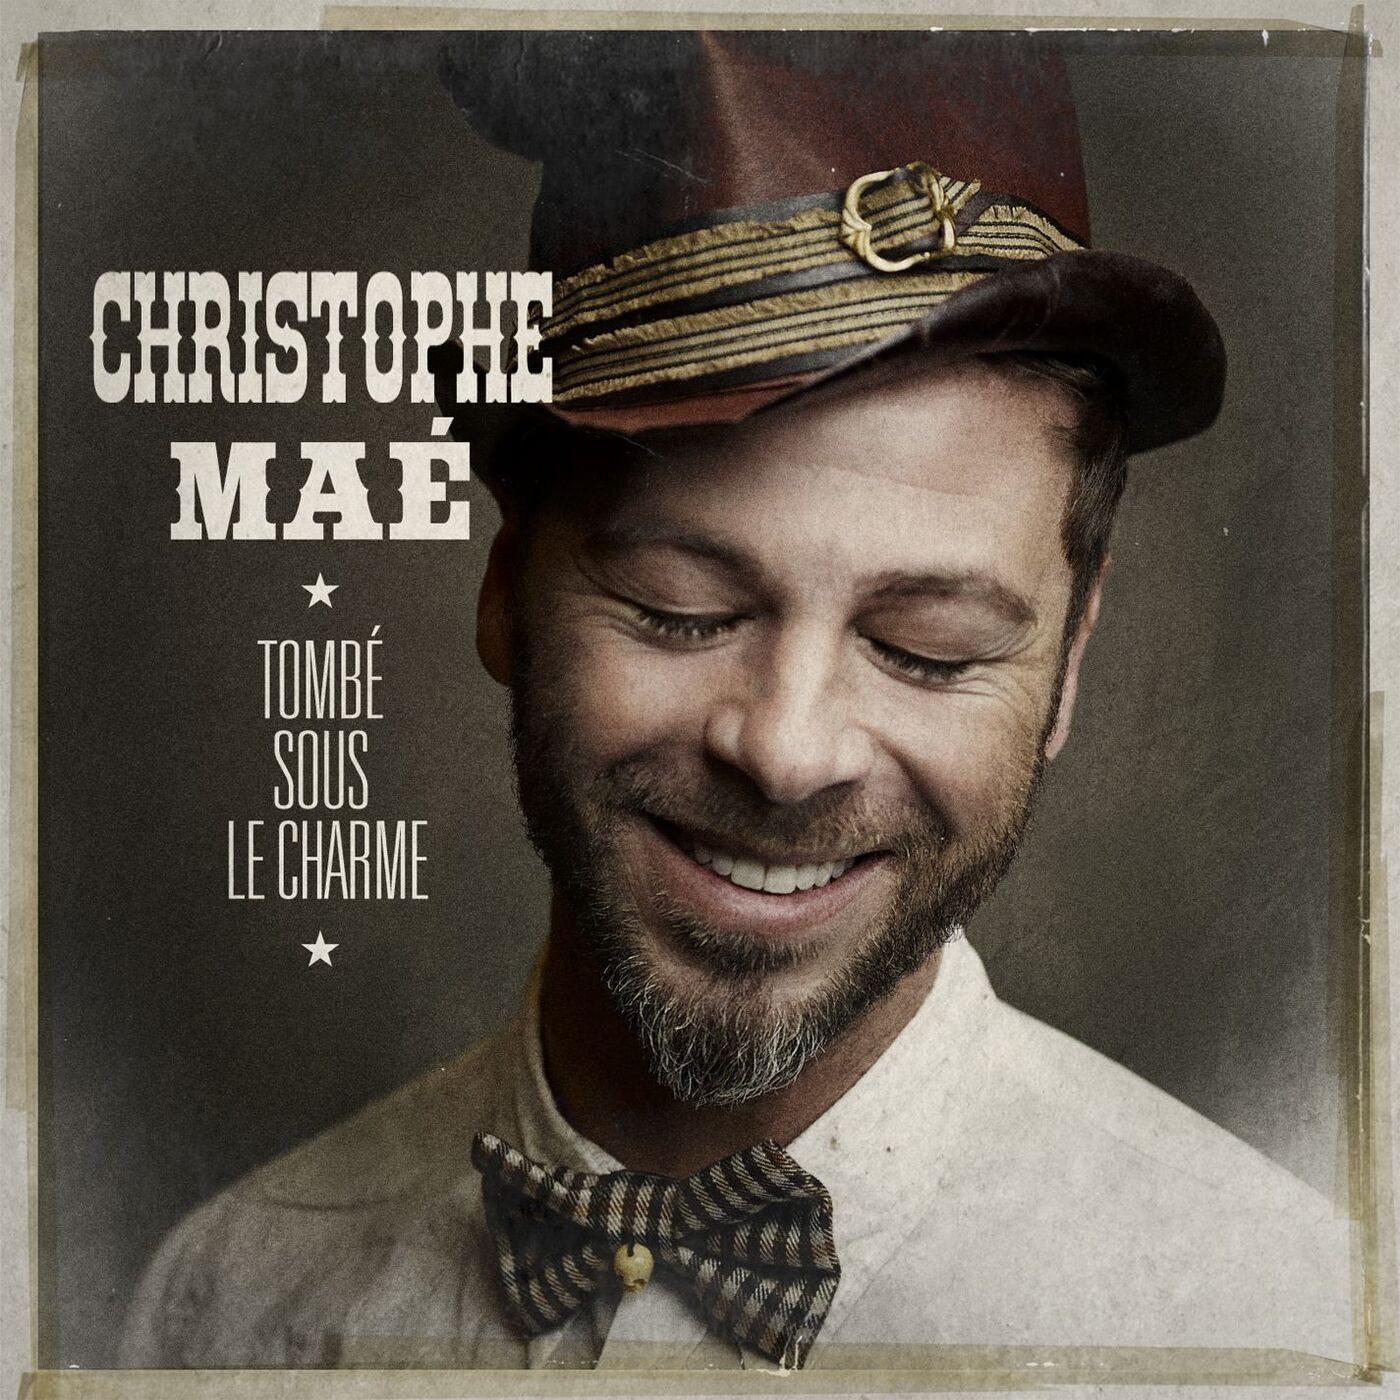 Cristophe mae песни. Christophe. Кристоф мае. Француз Кристоф Маэ. Christophe Maé обложка альбома.